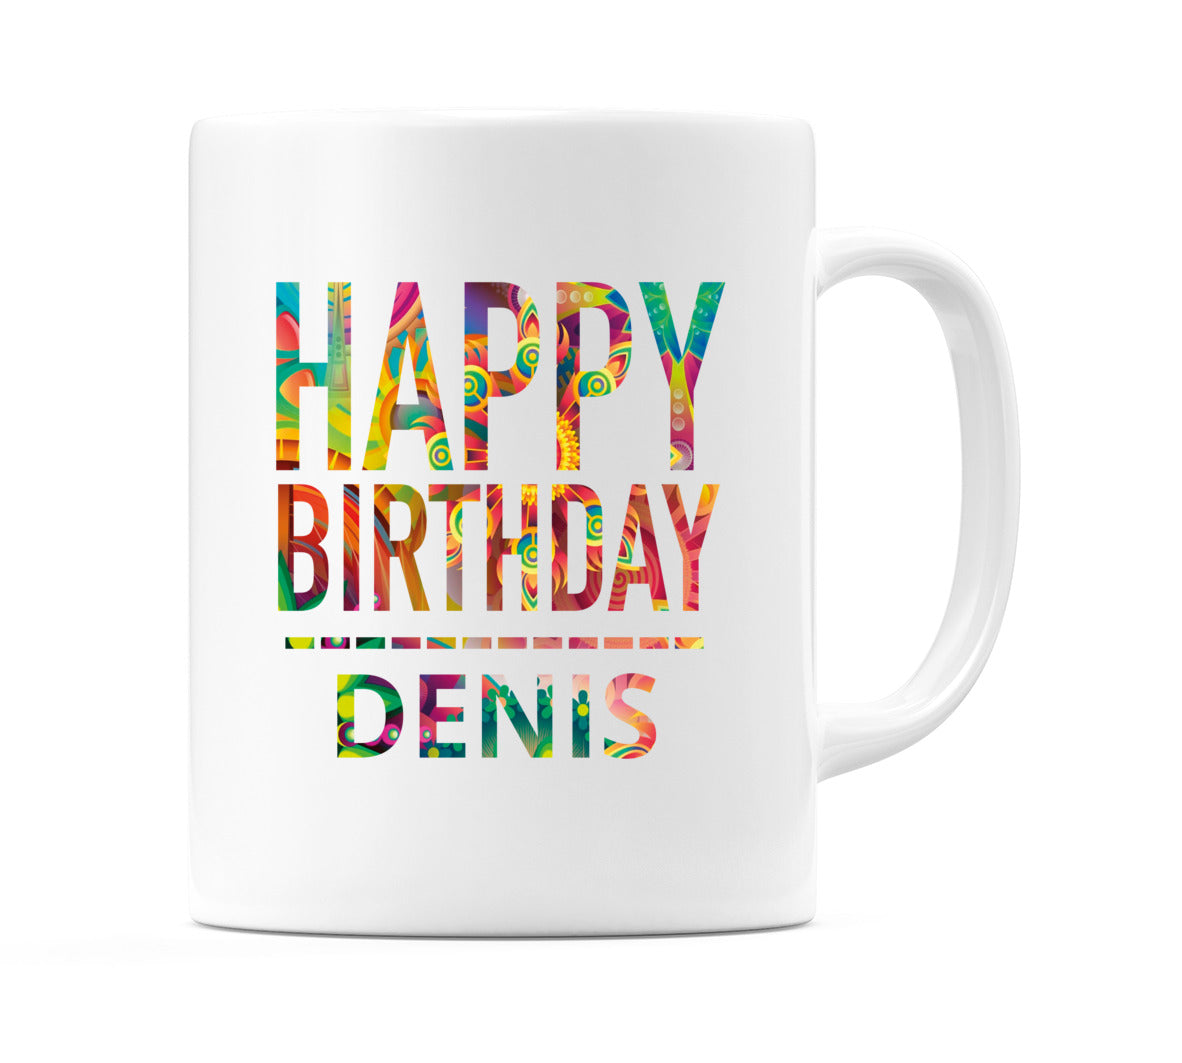 Happy Birthday Denis (Tie Dye Effect) Mug Cup by WeDoMugs